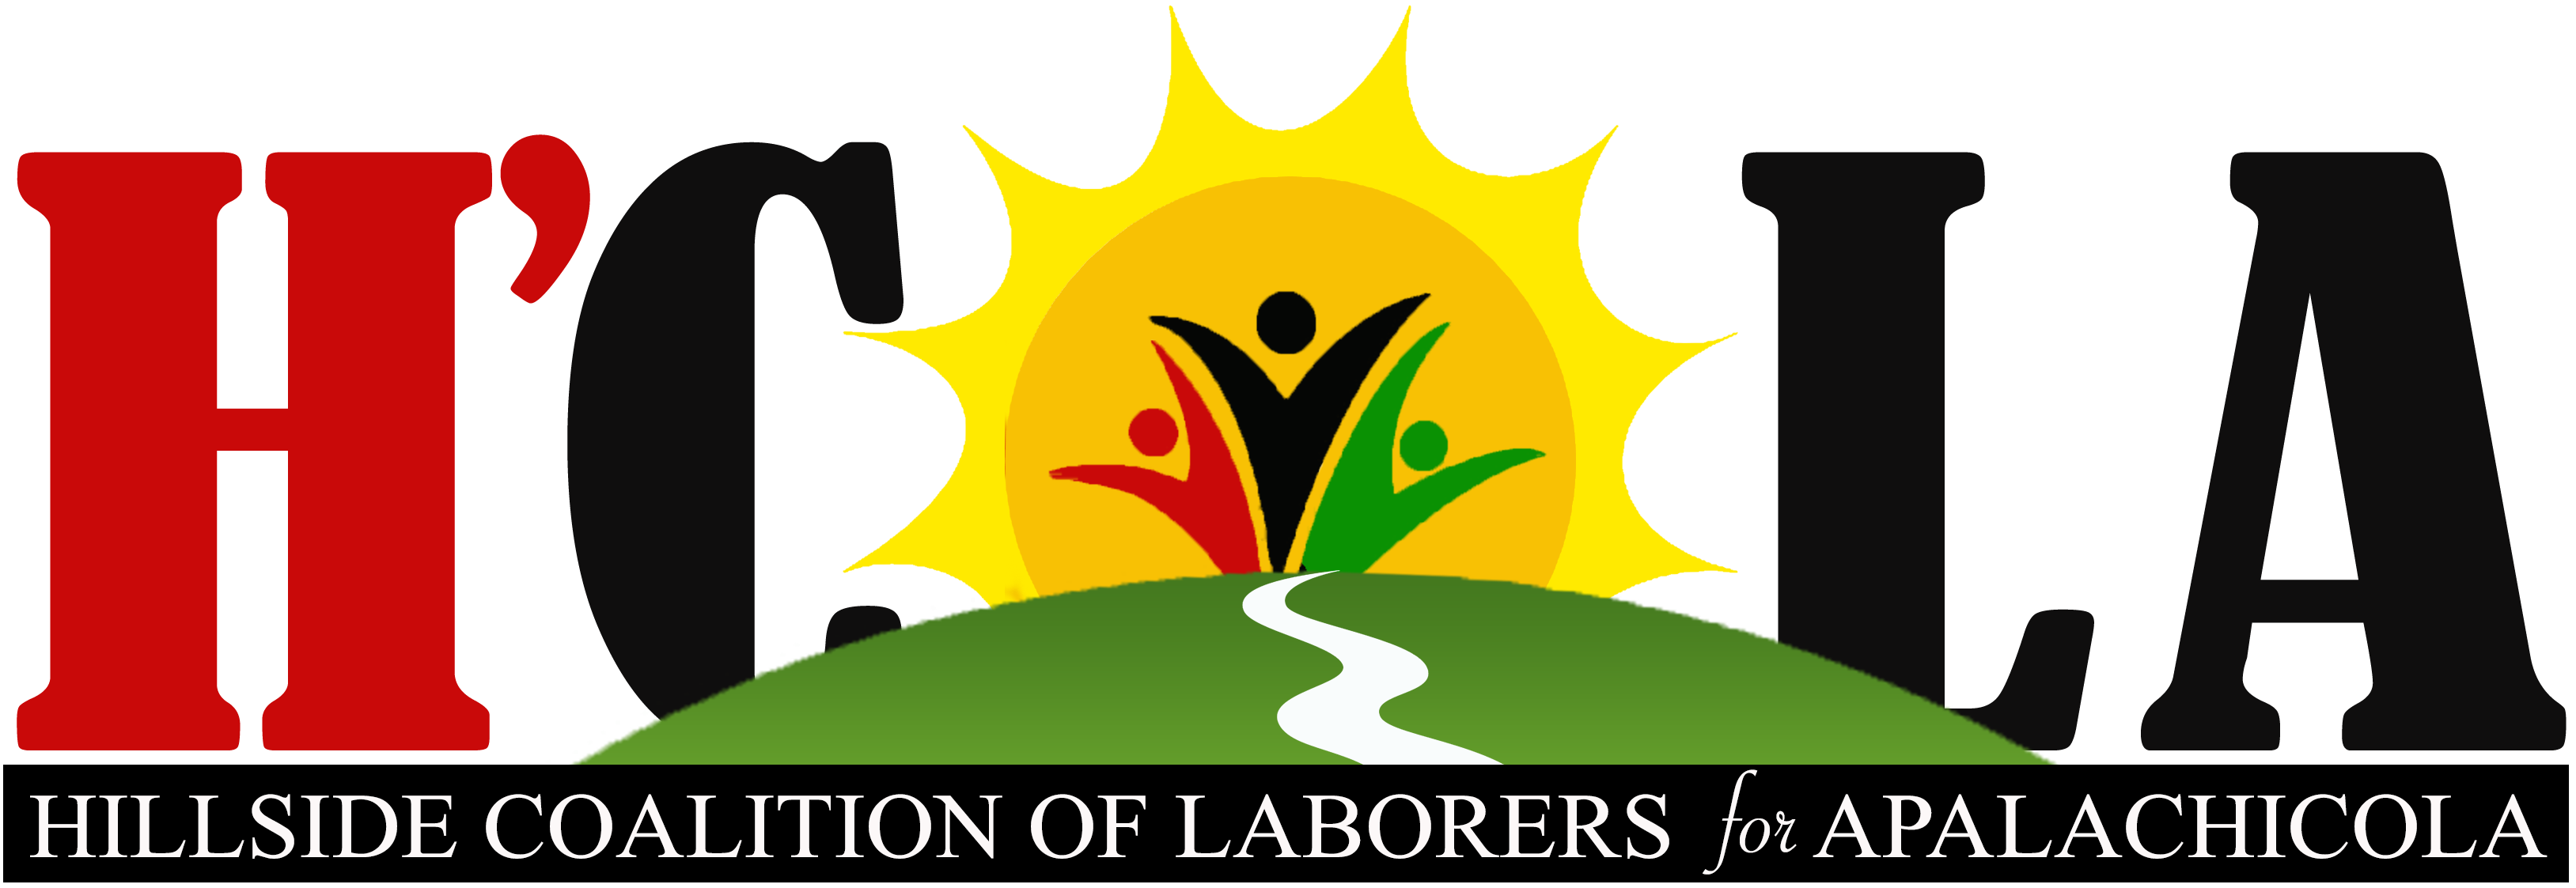 Hillside Coalition of Laborers for Apalachicola logo